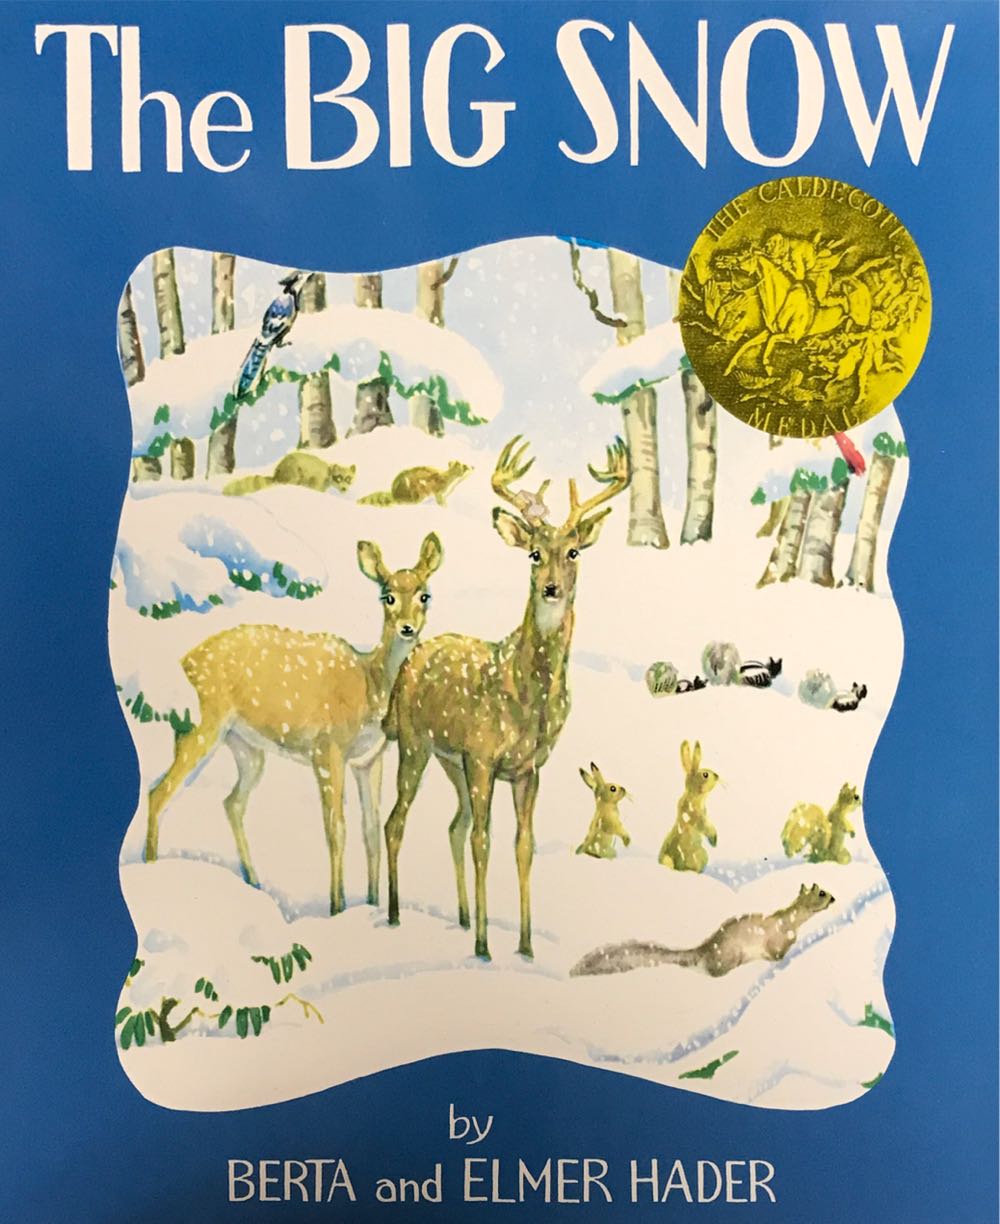 Big Snow, The - Berta and Elmer Hader (Scholastic Inc. - Paperback) book collectible [Barcode 9780590444392] - Main Image 3